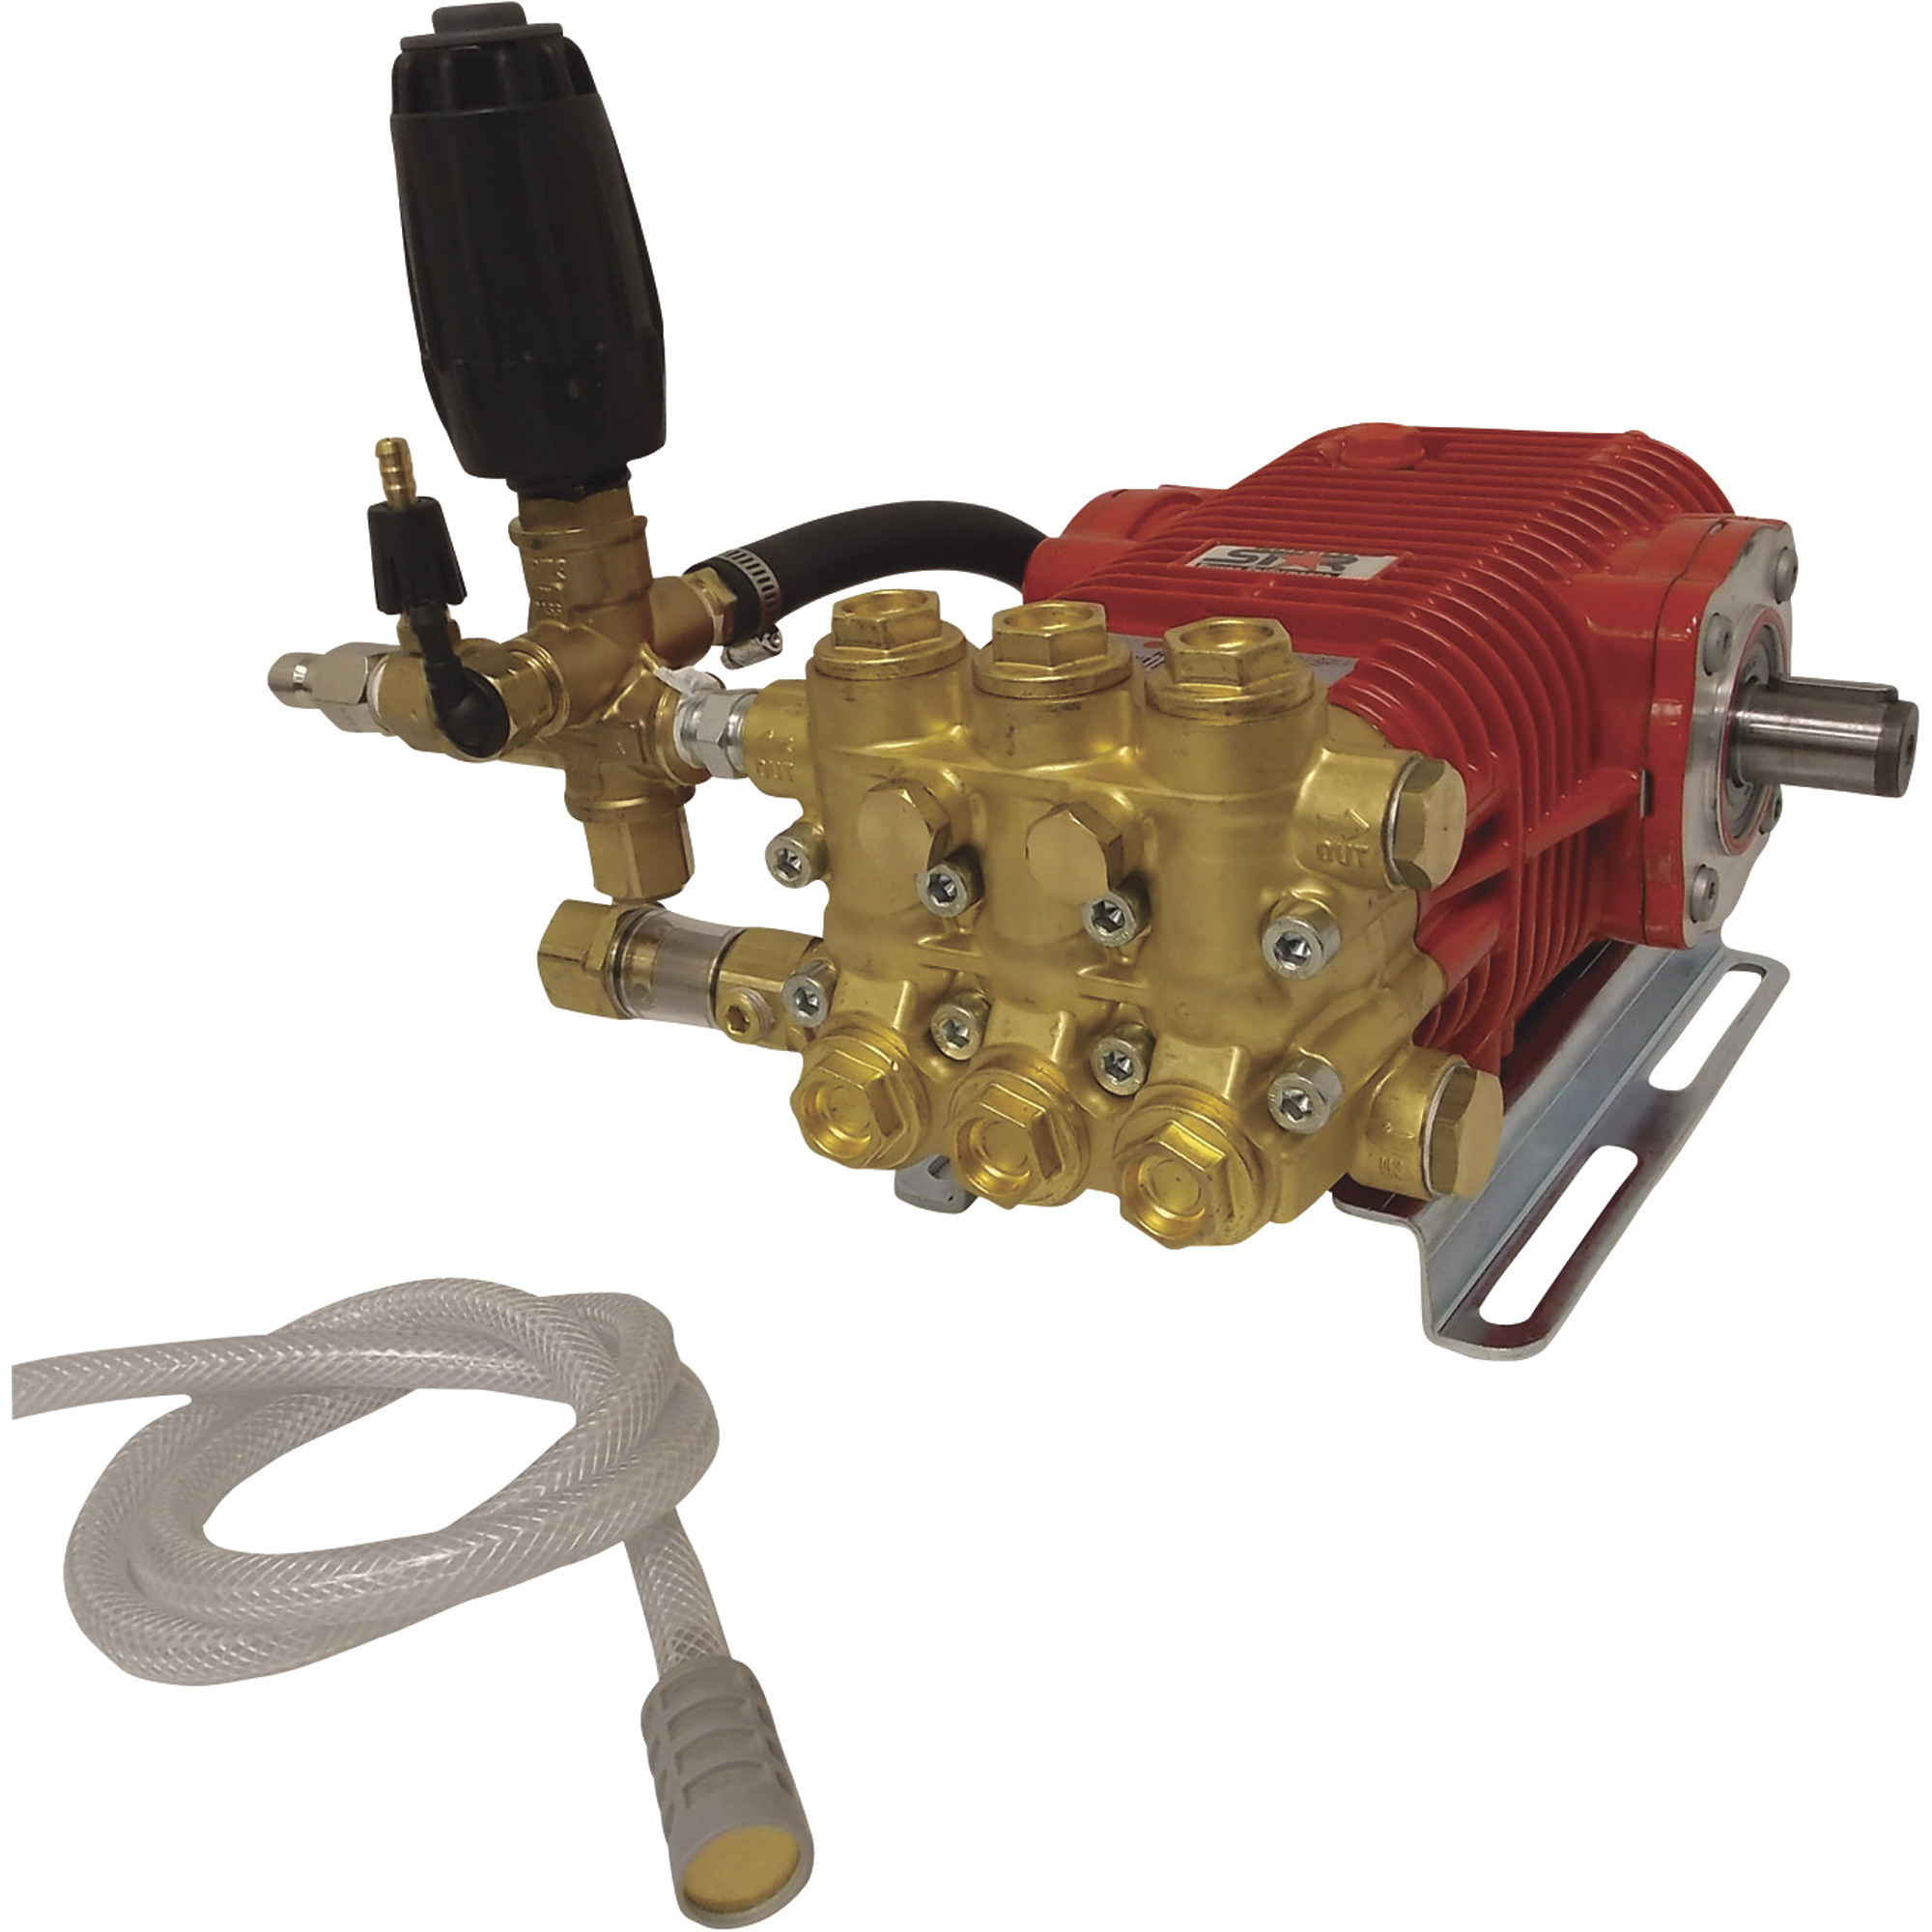 NorthStar Easy Bolt-On Super High Flow Pressure Washer Pump, 3000 PSI, 5.0 GPM, Belt Drive, Model NSSHFB 5030